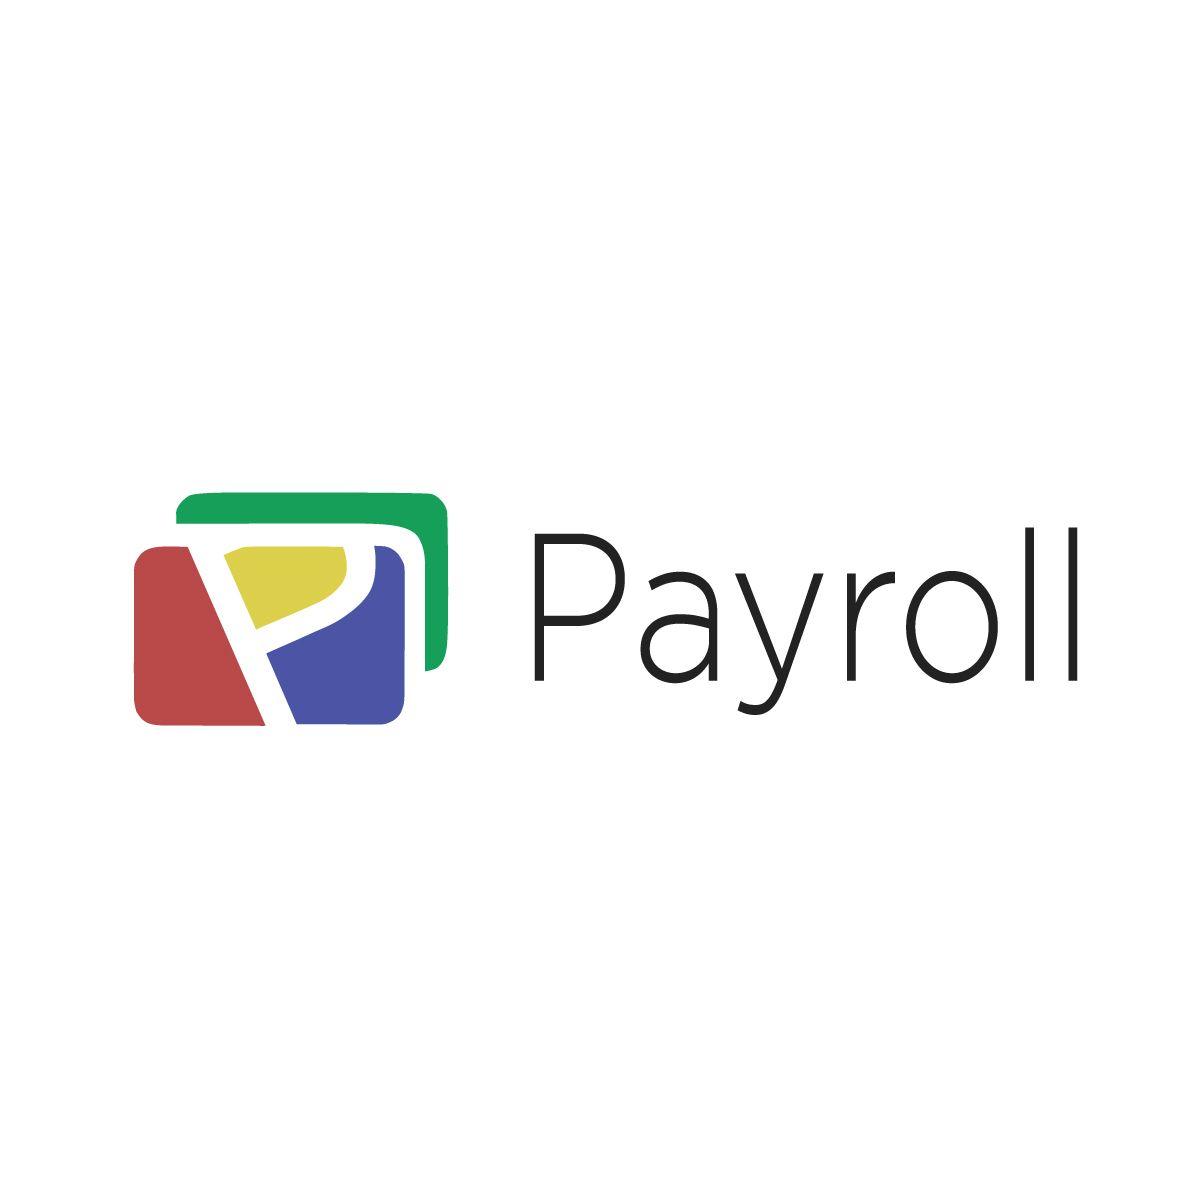 Payroll Logo - Elegant, Playful, Fashion Logo Design for (None provided)